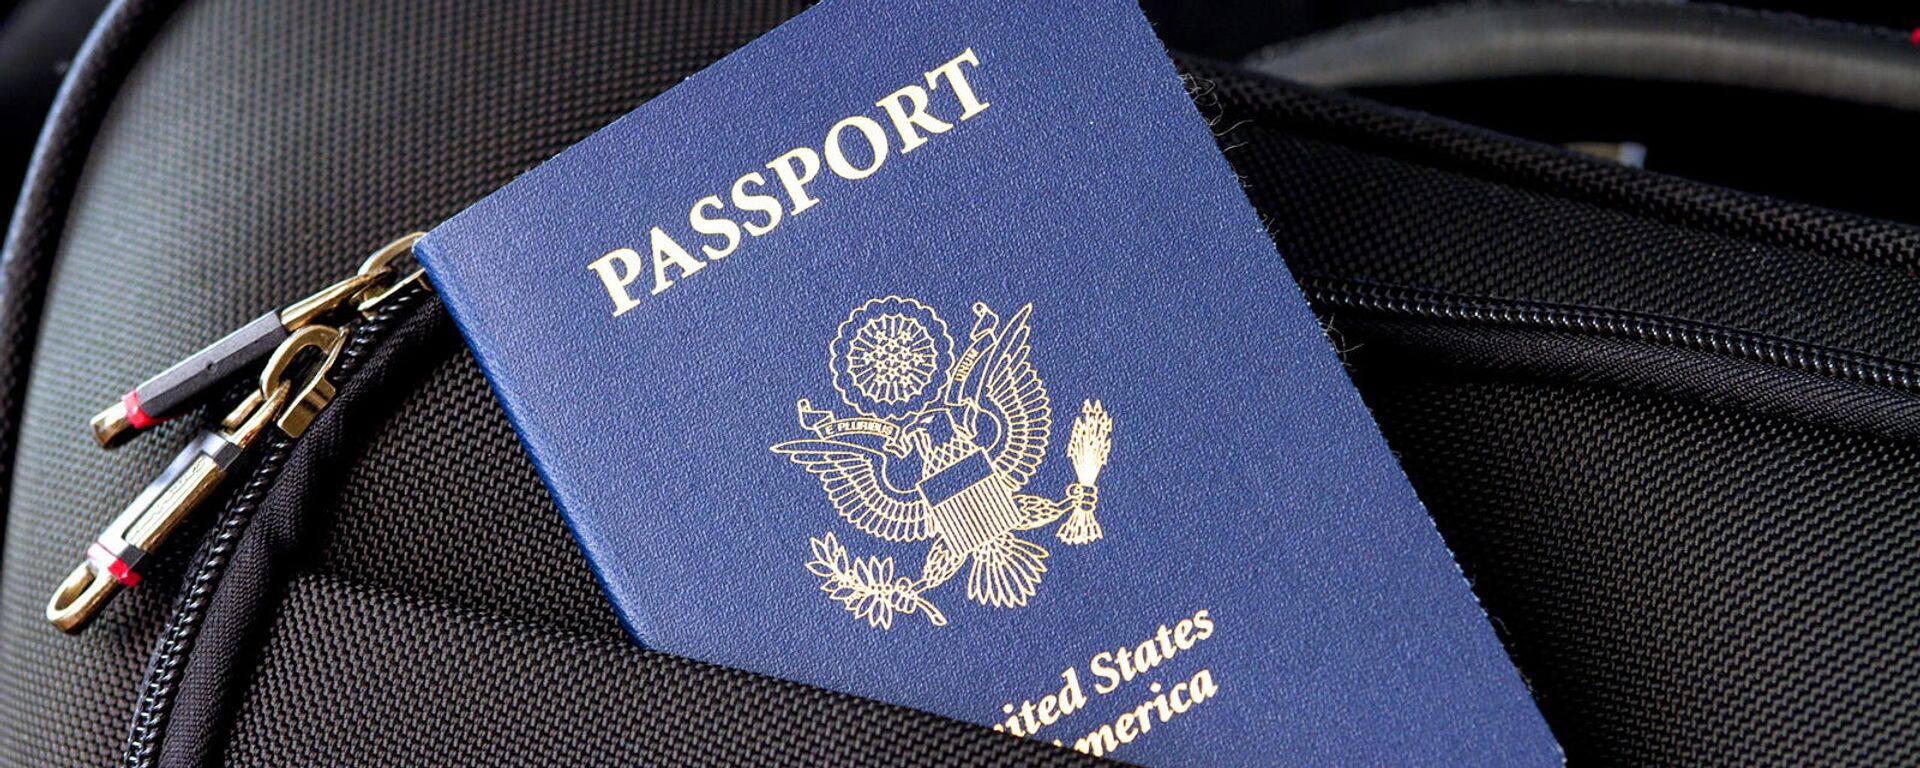 Паспорт гражданина США - Sputnik Արմենիա, 1920, 05.02.2021